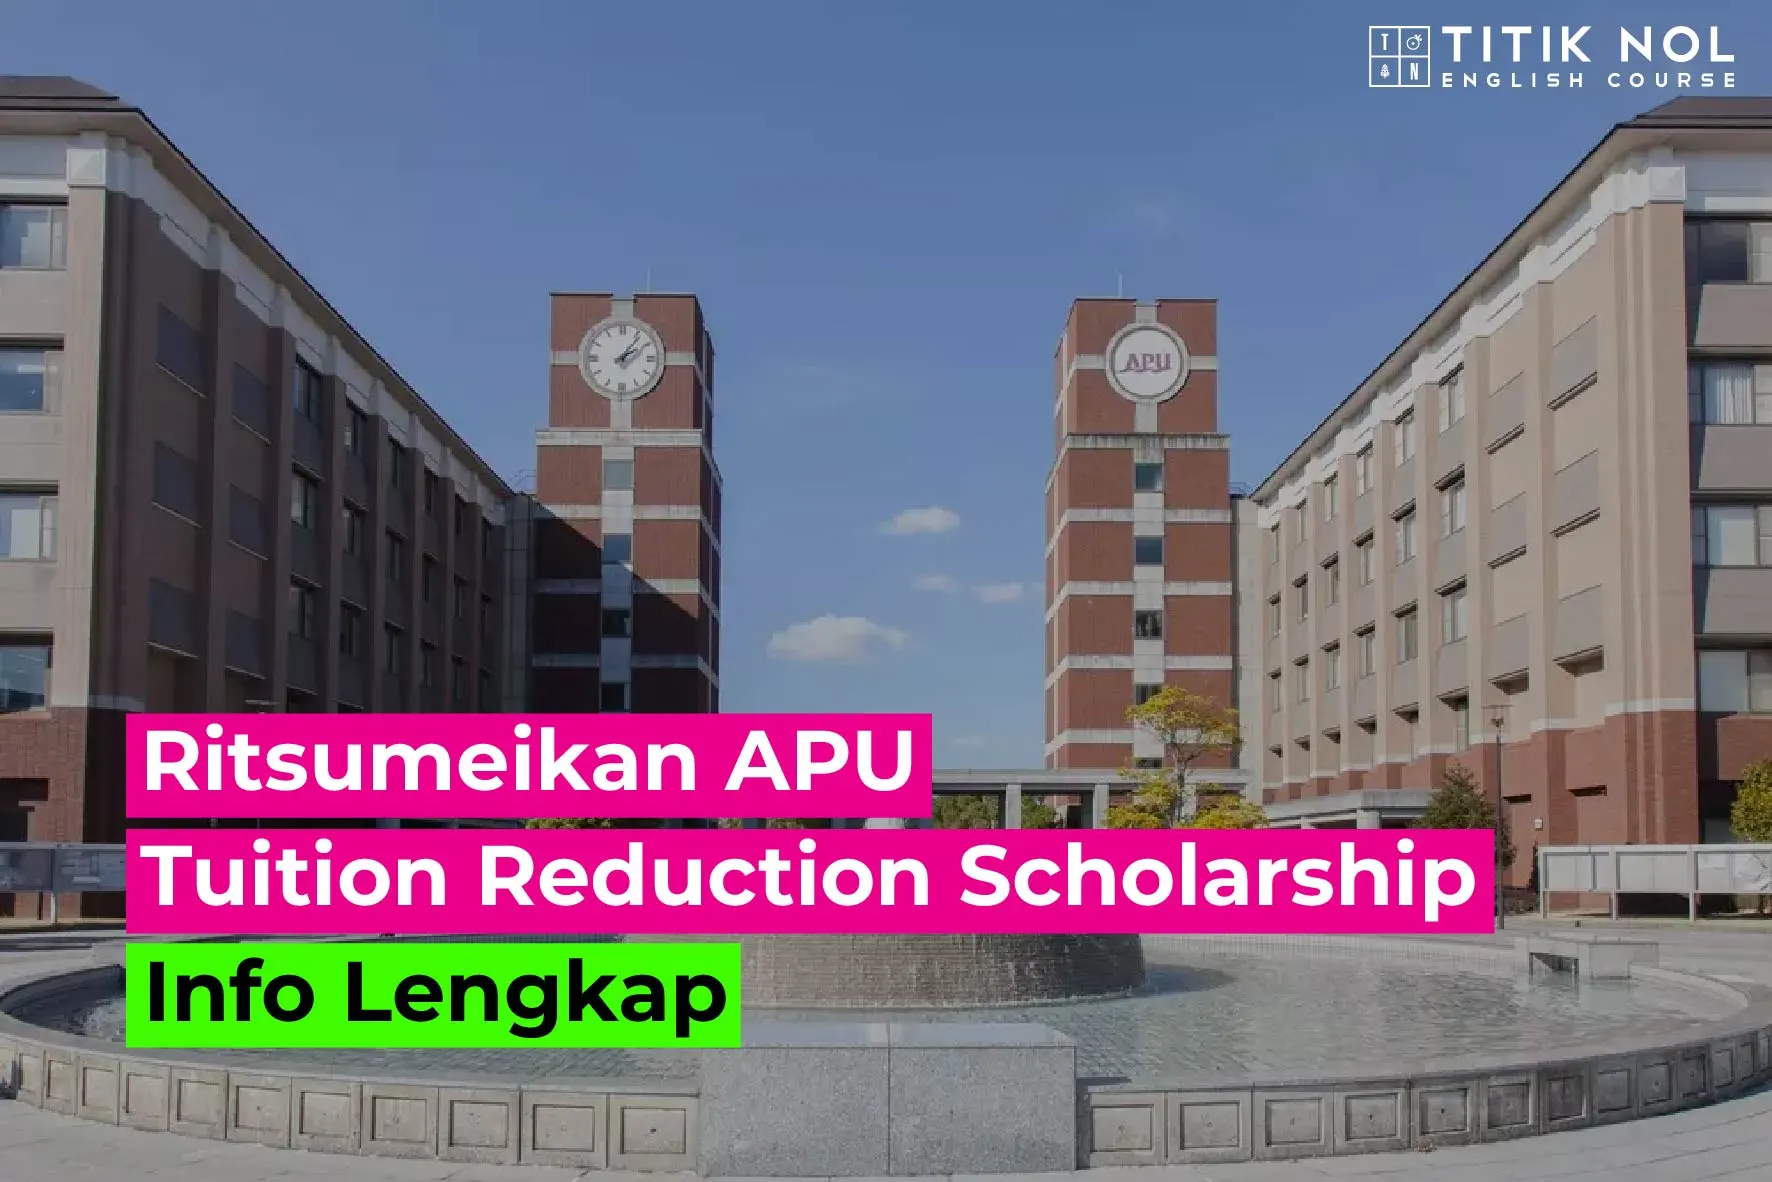 Ritsumeikan APU Tuition Reduction Scholarship